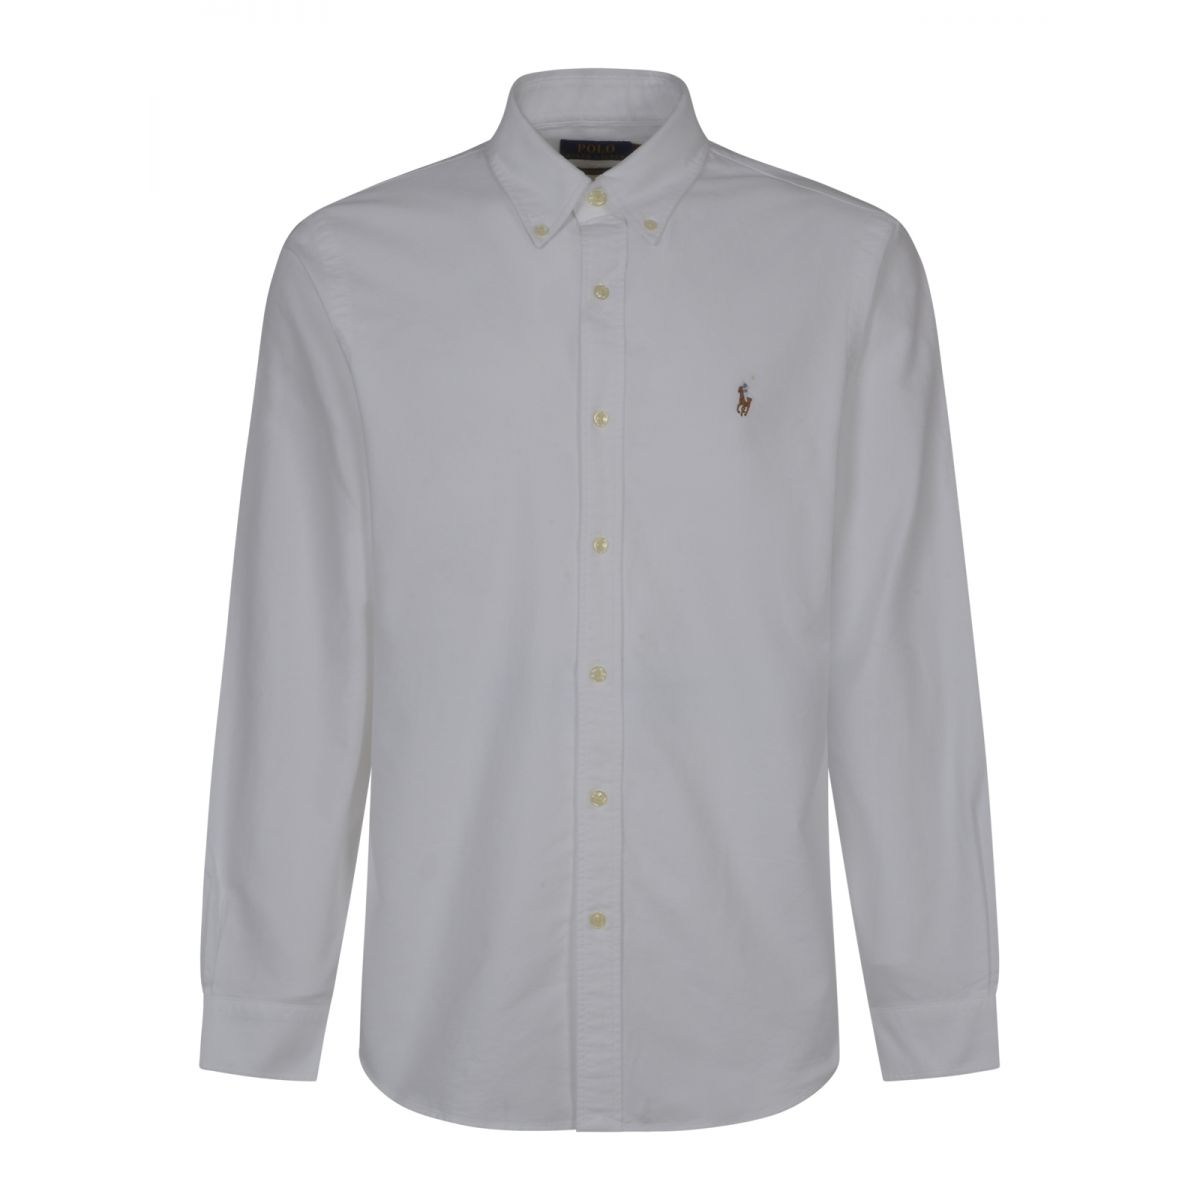 POLO RALPH LAUREN - Custom fit Oxford shirt